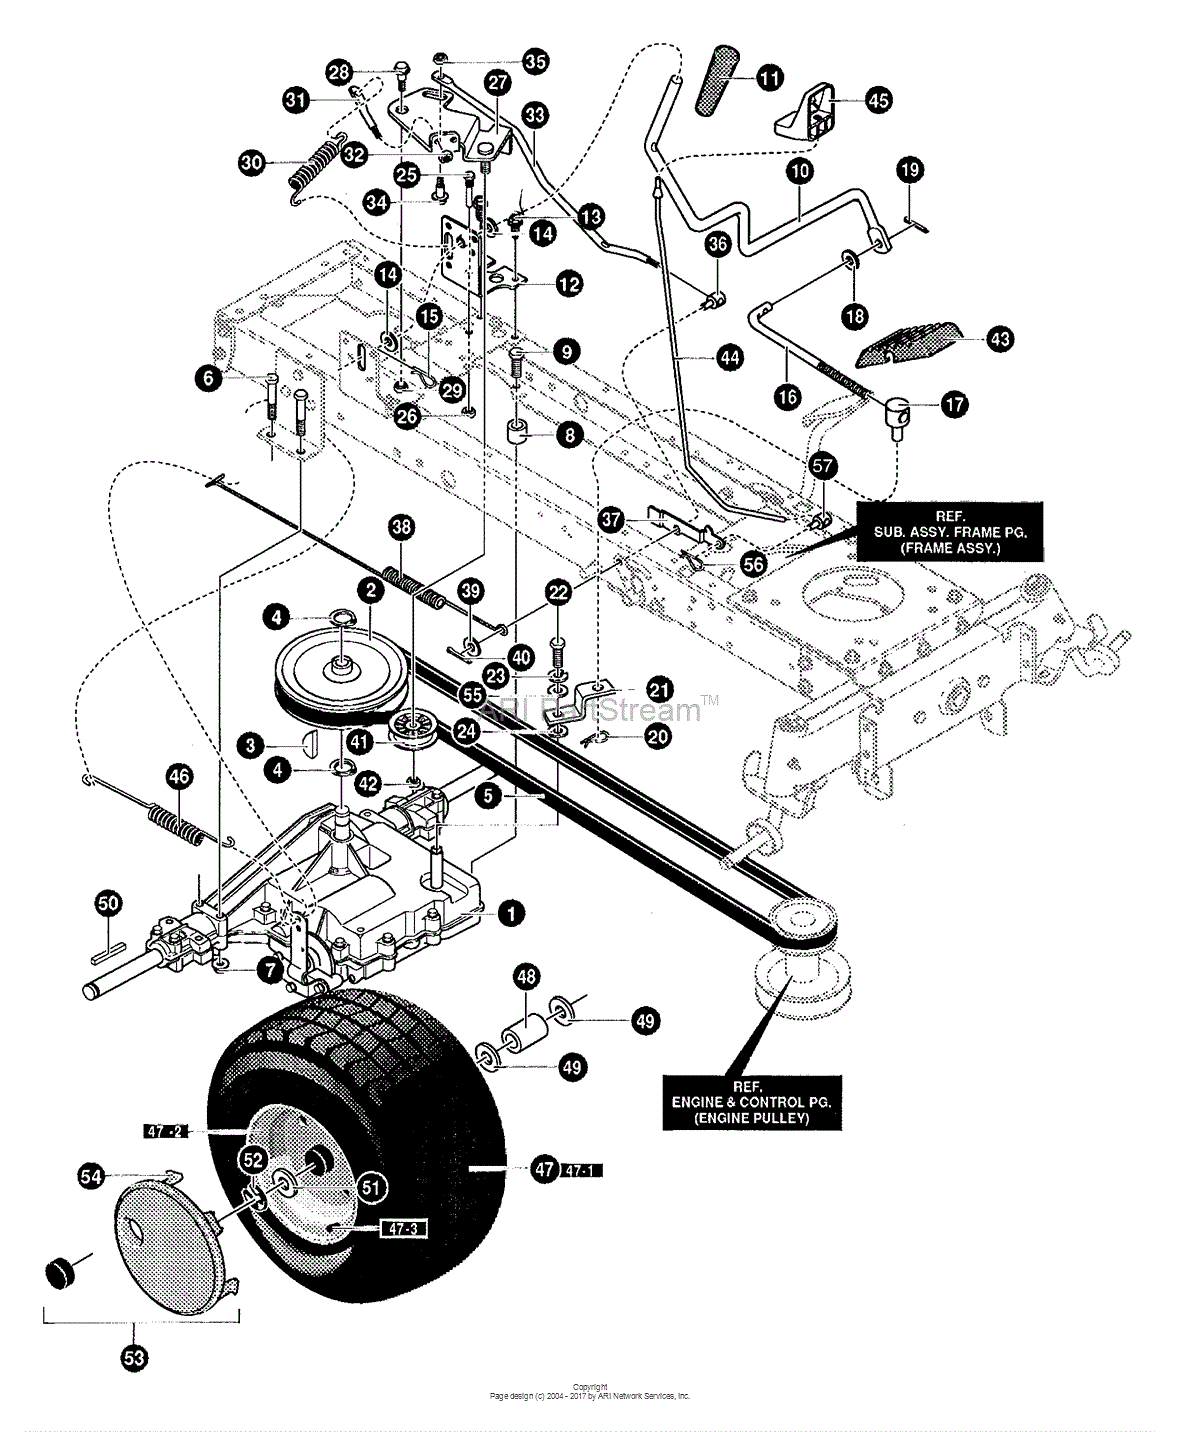 Drive belt diagram for murray riding mower